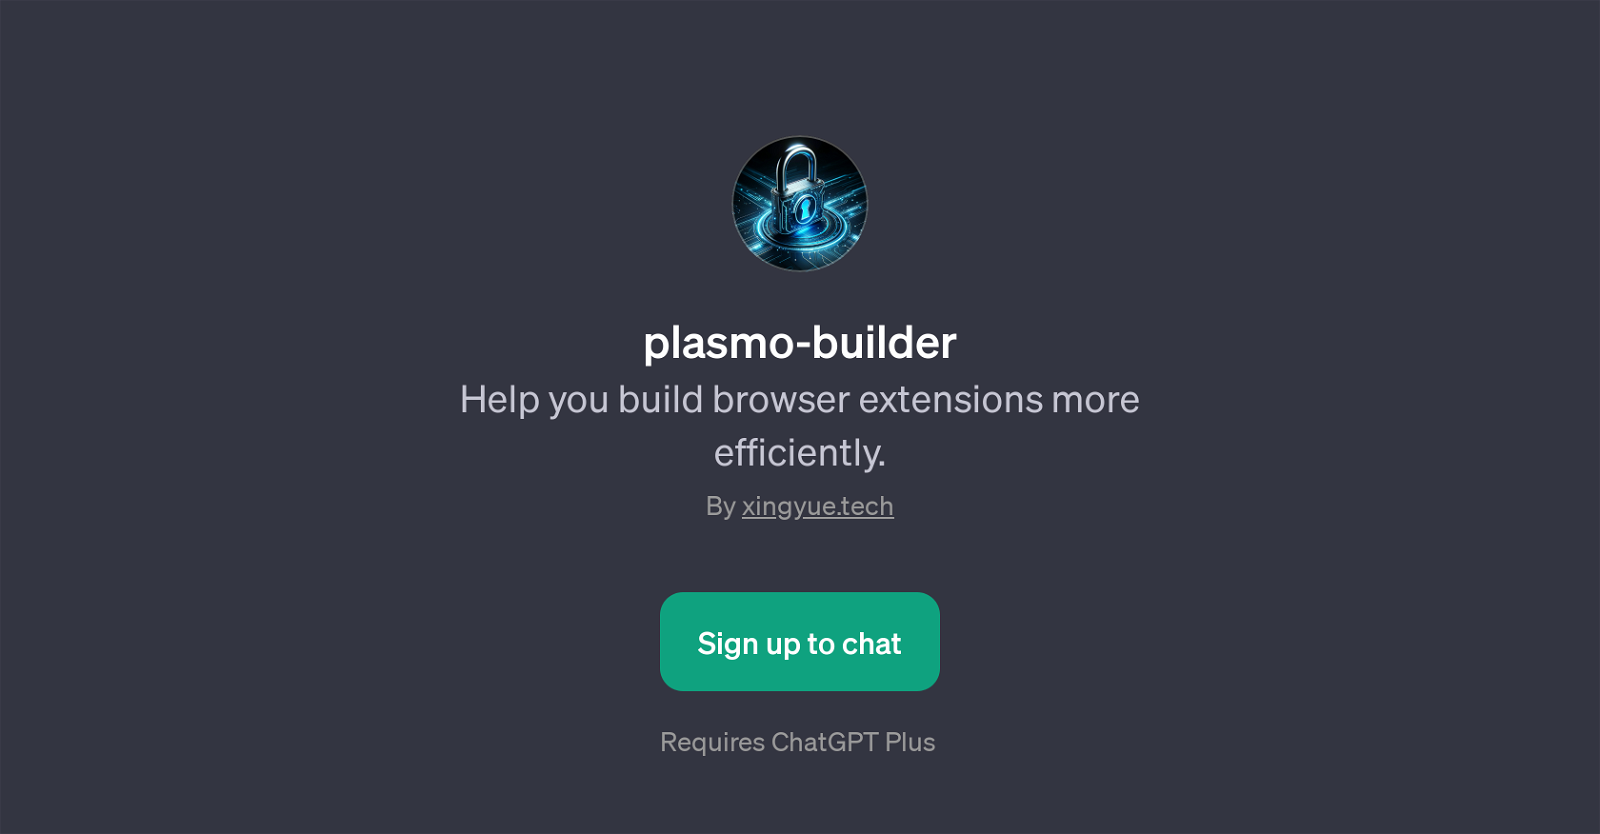 plasmo-builder website